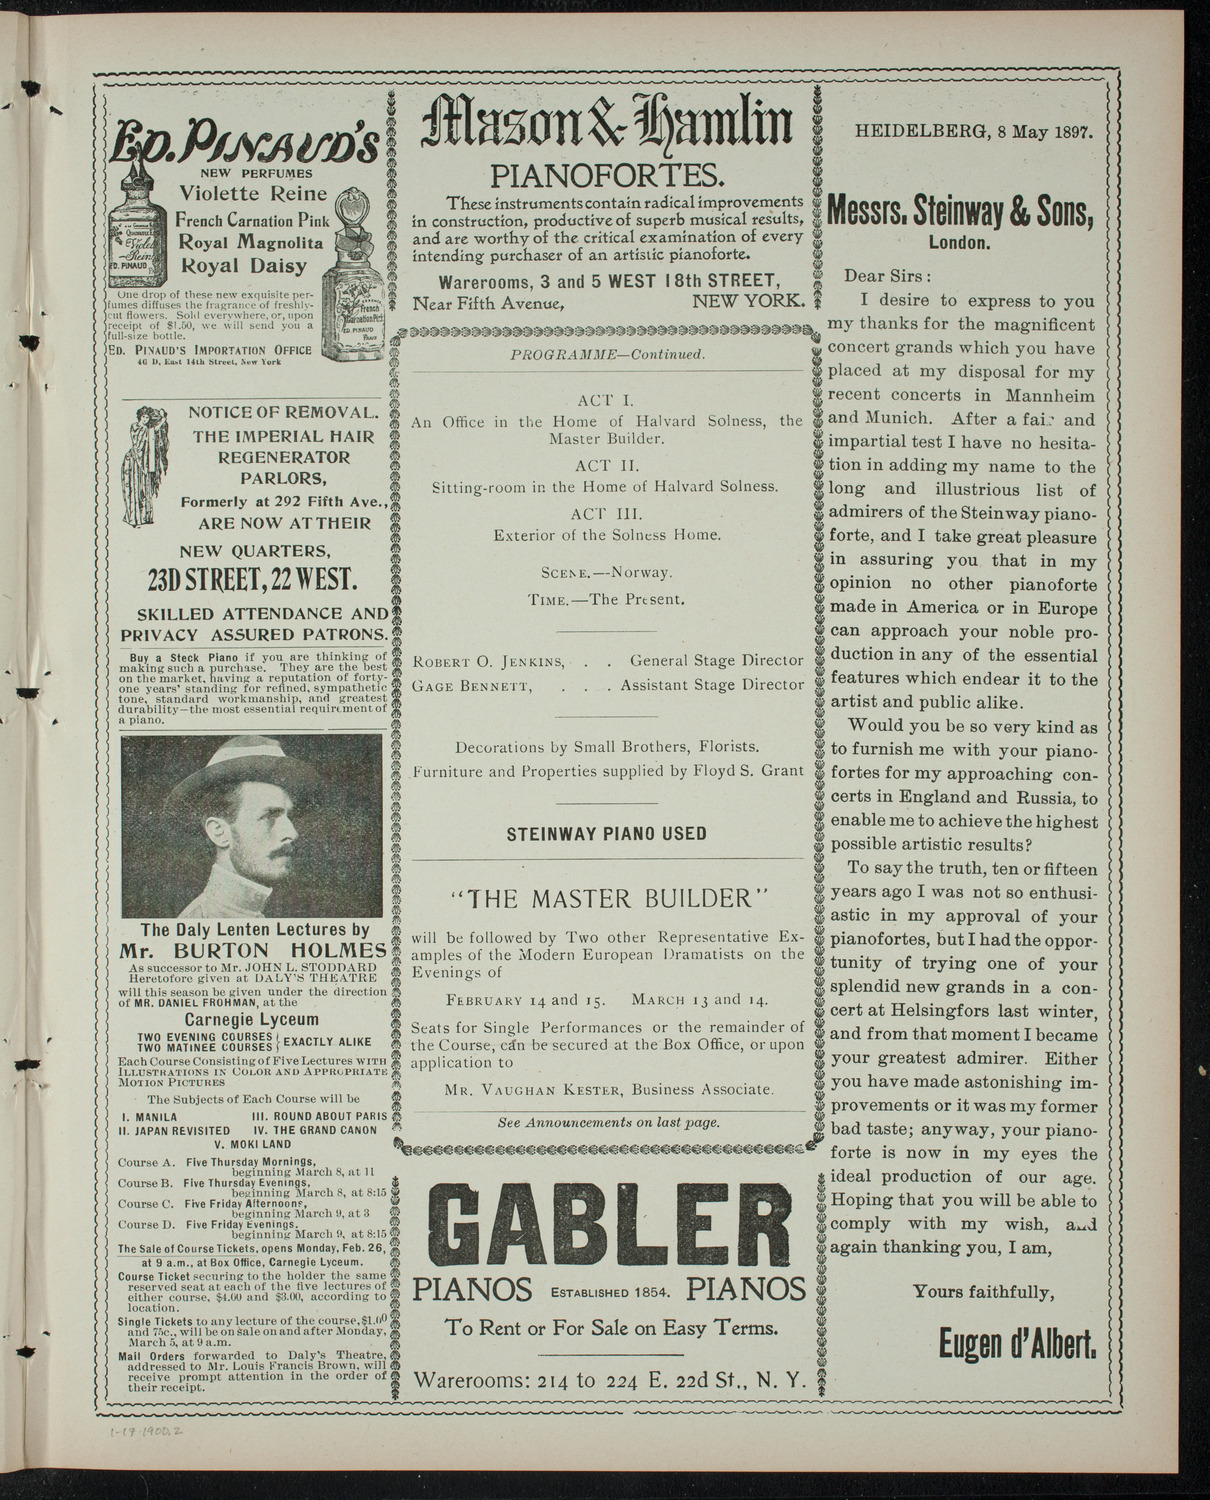 Mr. John Blair's Course of Modern Plays, January 17, 1900, program page 3